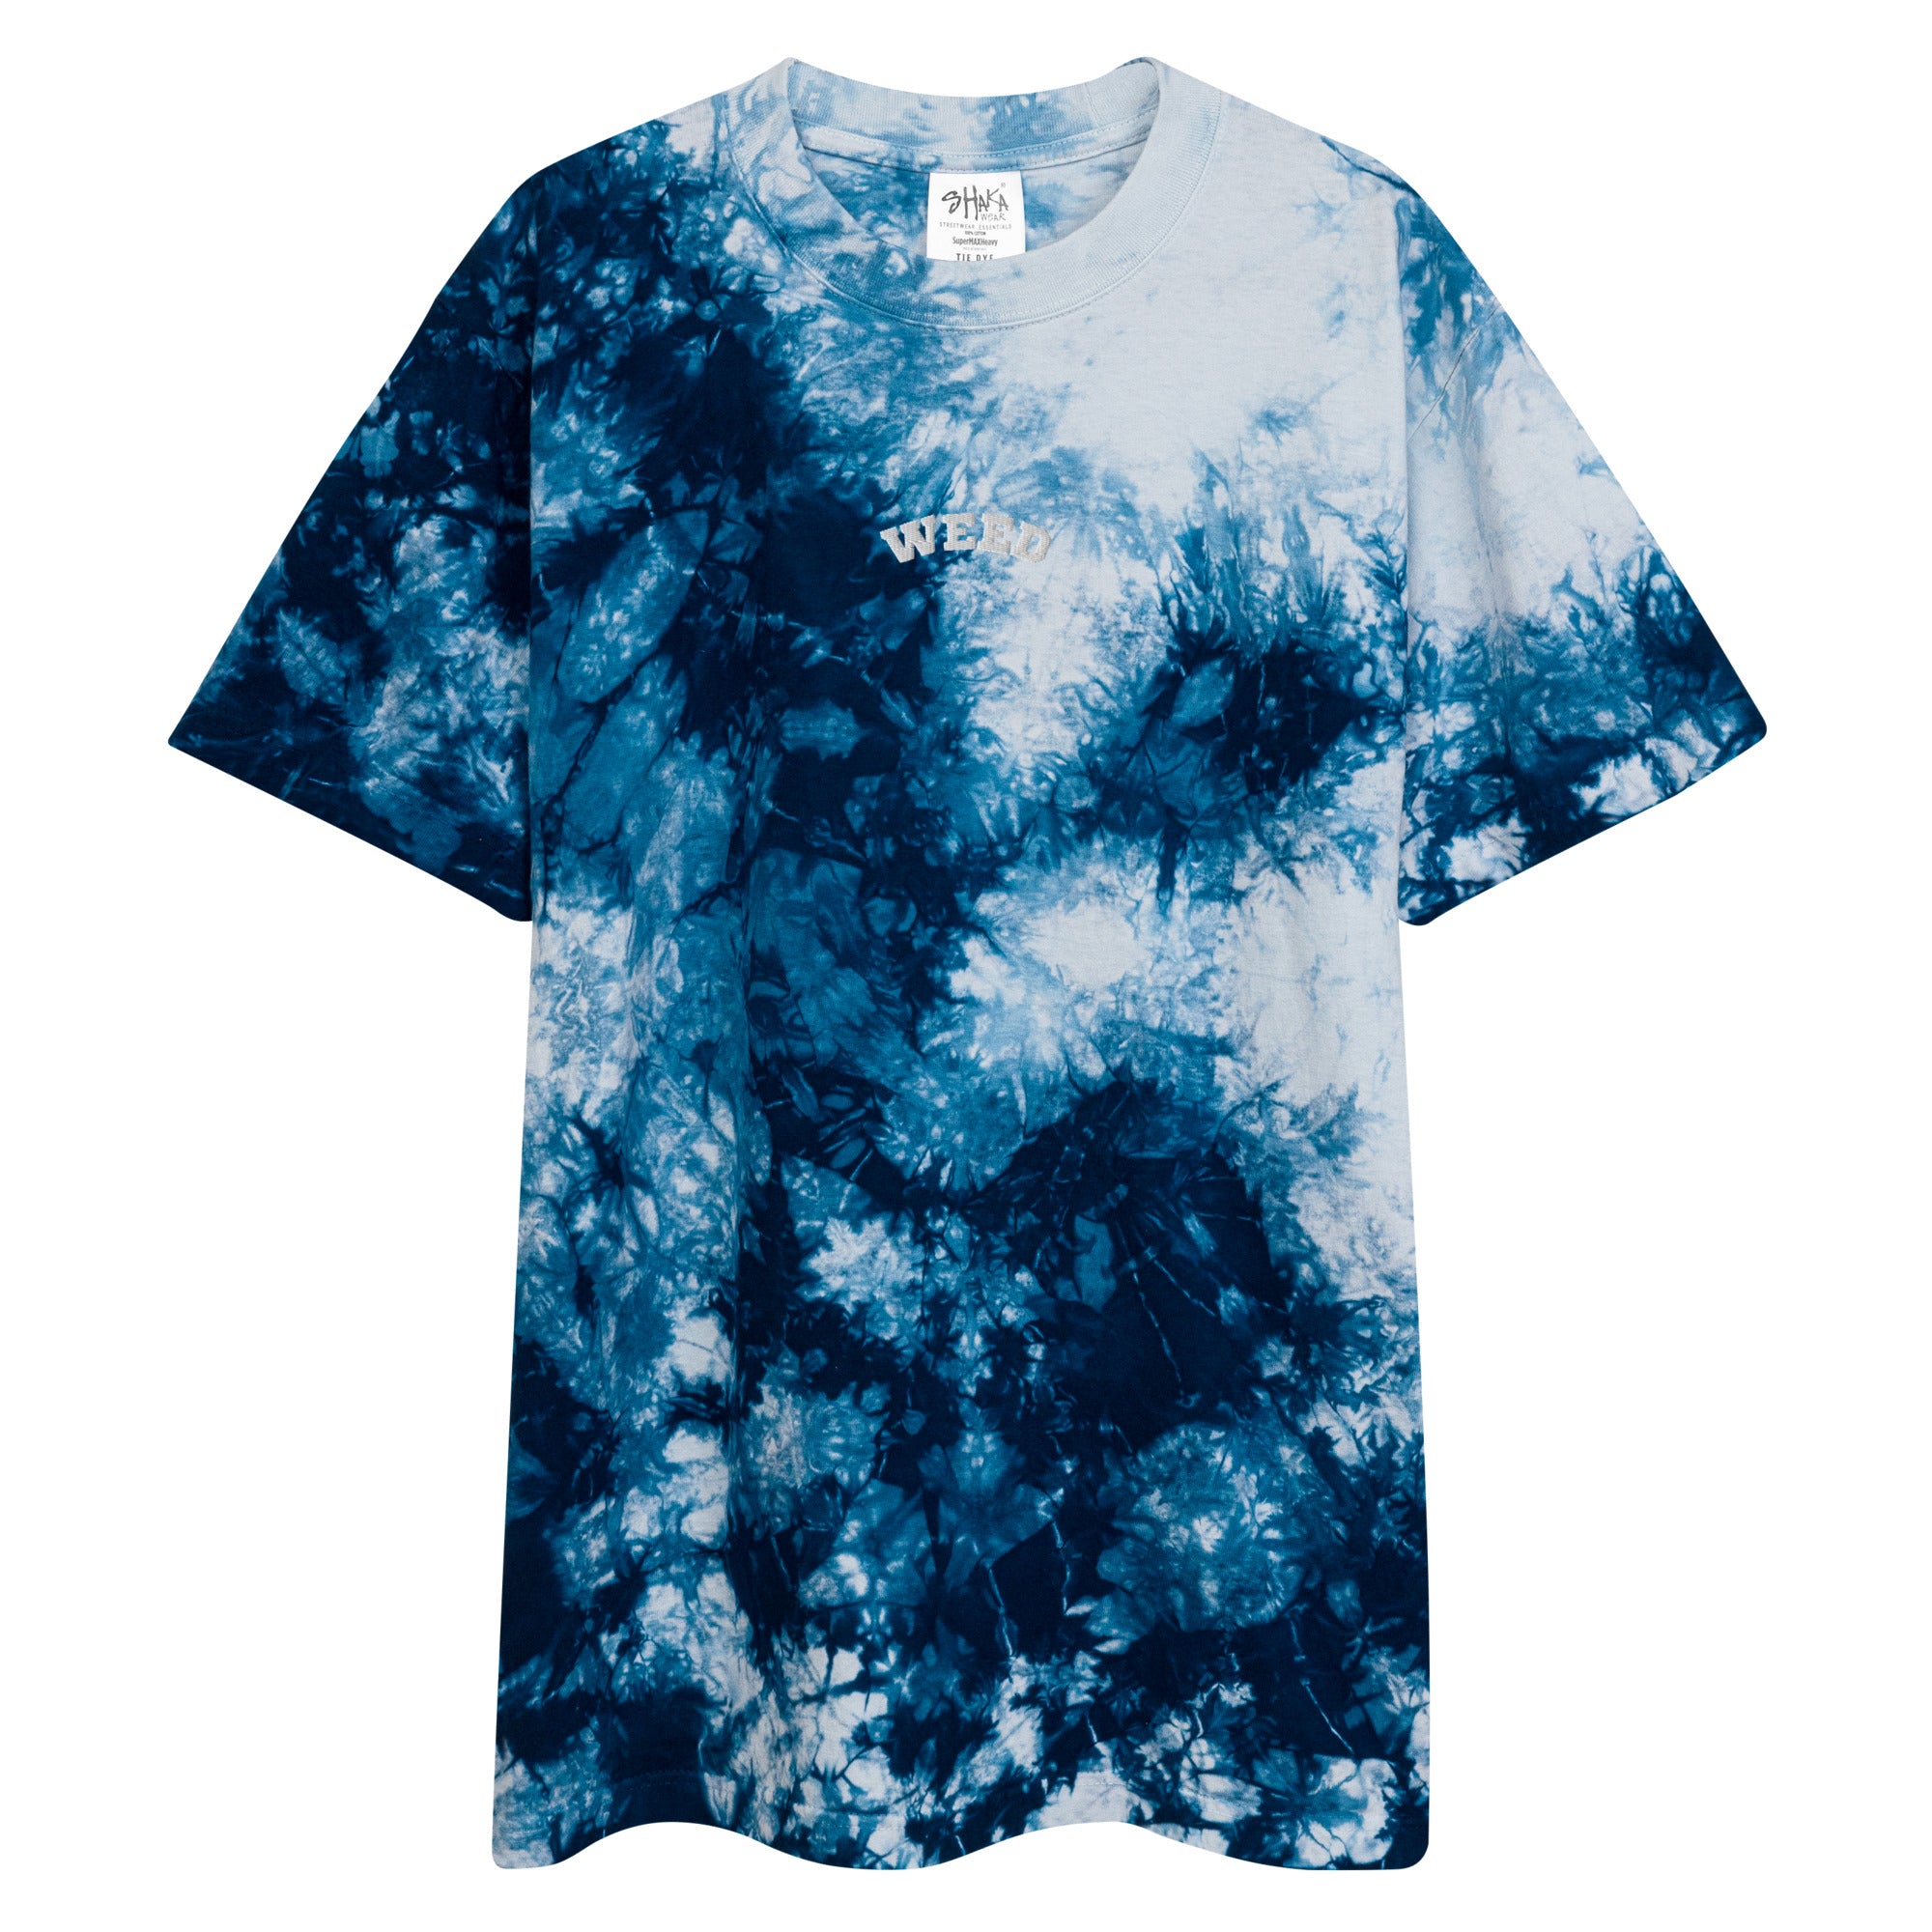 Tshirt 1781- Cotton100% Jersey- Bubble Rope- Pale Blue